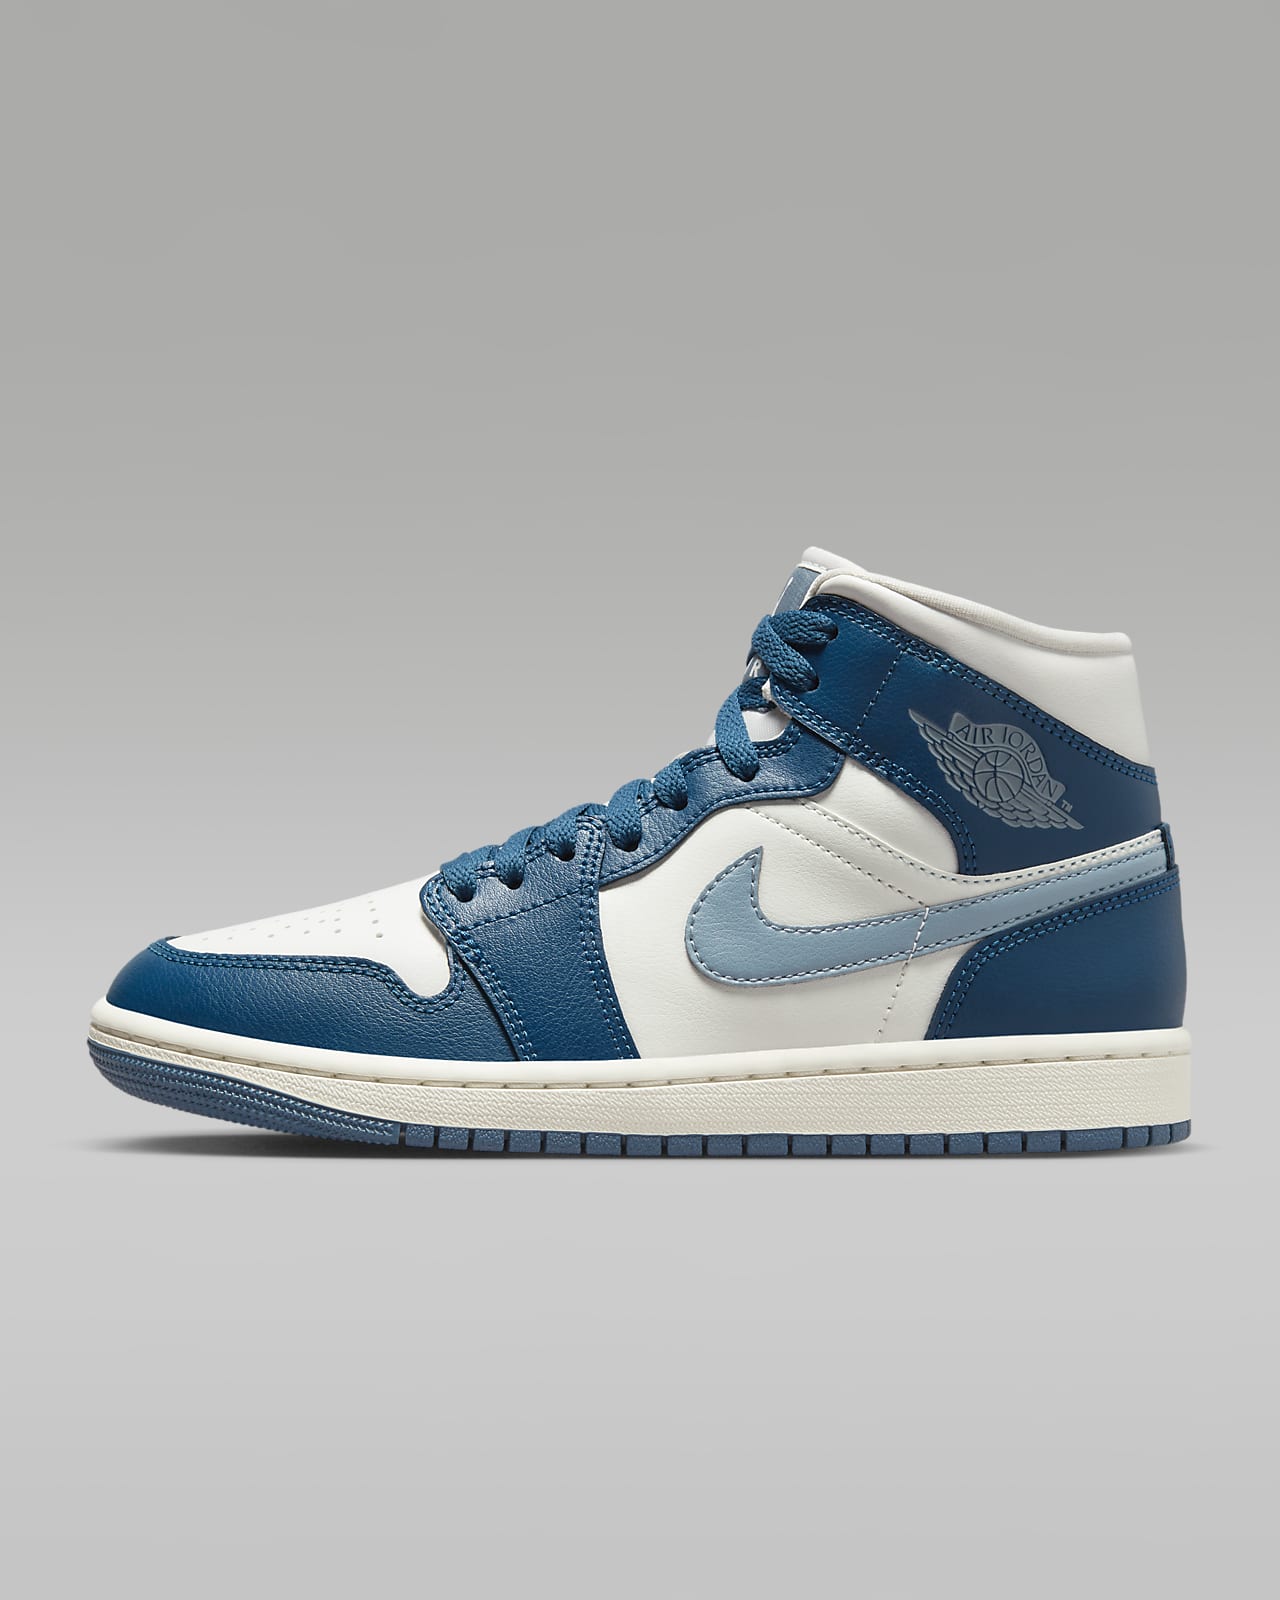 Jordan | Nike Air Jordan | Sneakers & Clothing | JD Sports